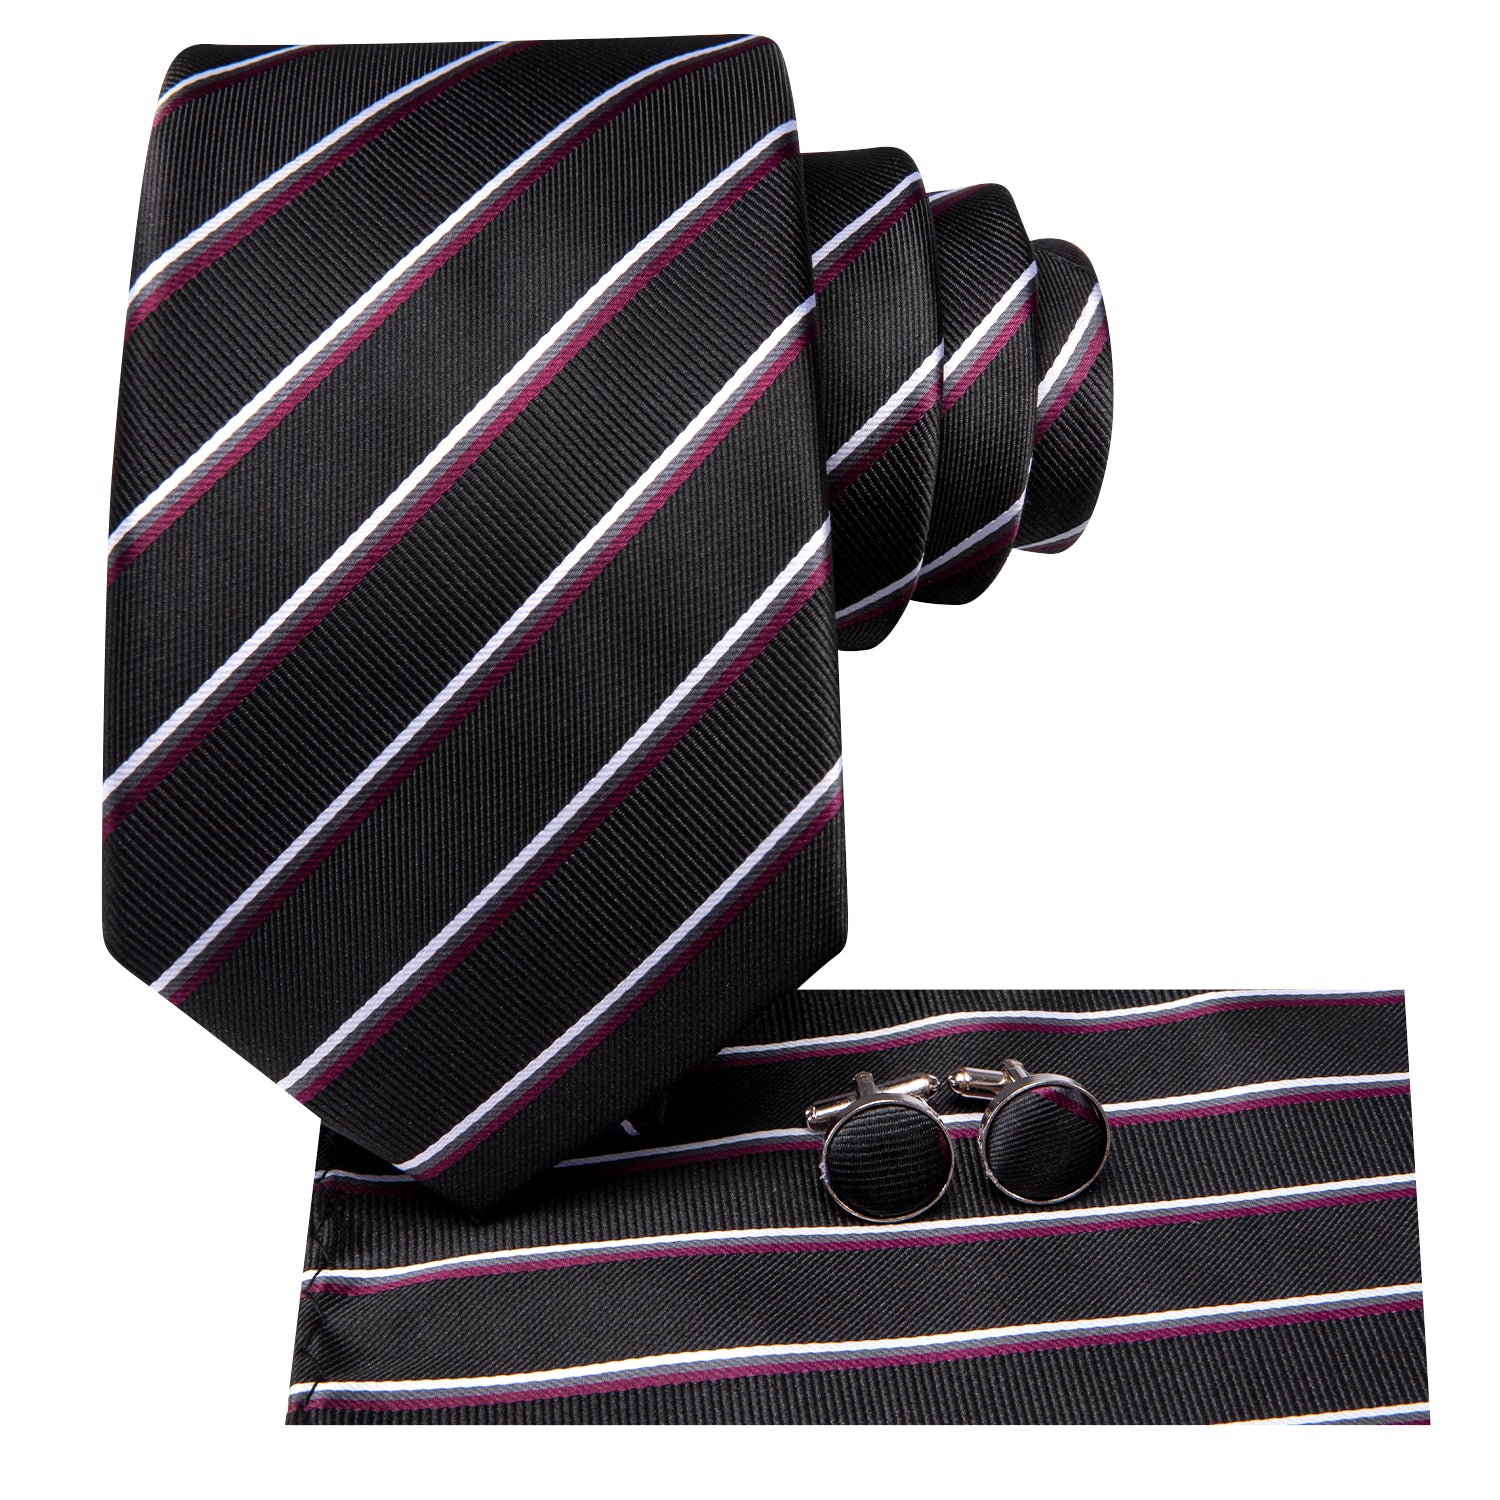 Hi-Tie Black Bugundy Striped Men's Tie Pocket Square Cufflinks Set